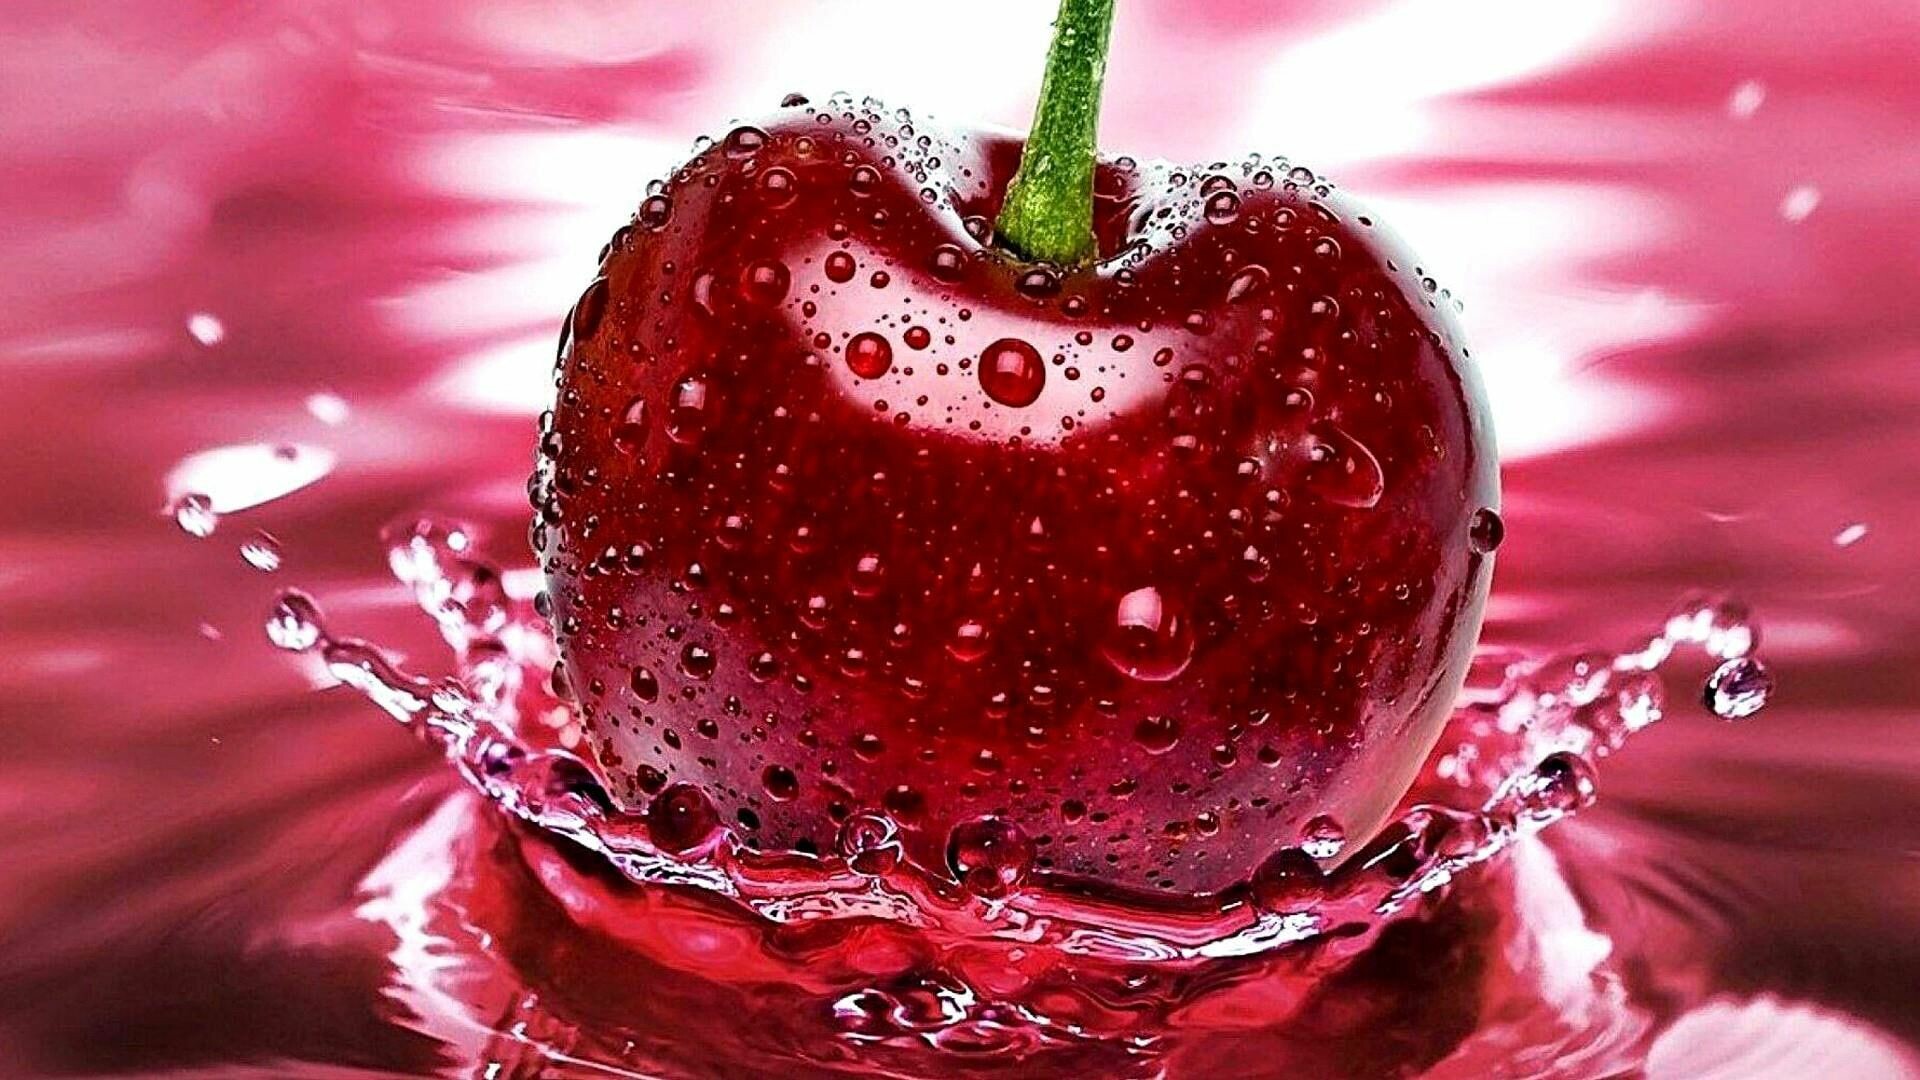 Fruit: Cherry, Genus Prunus, Low in calories and chock full of fiber, vitamins, minerals. 1920x1080 Full HD Wallpaper.